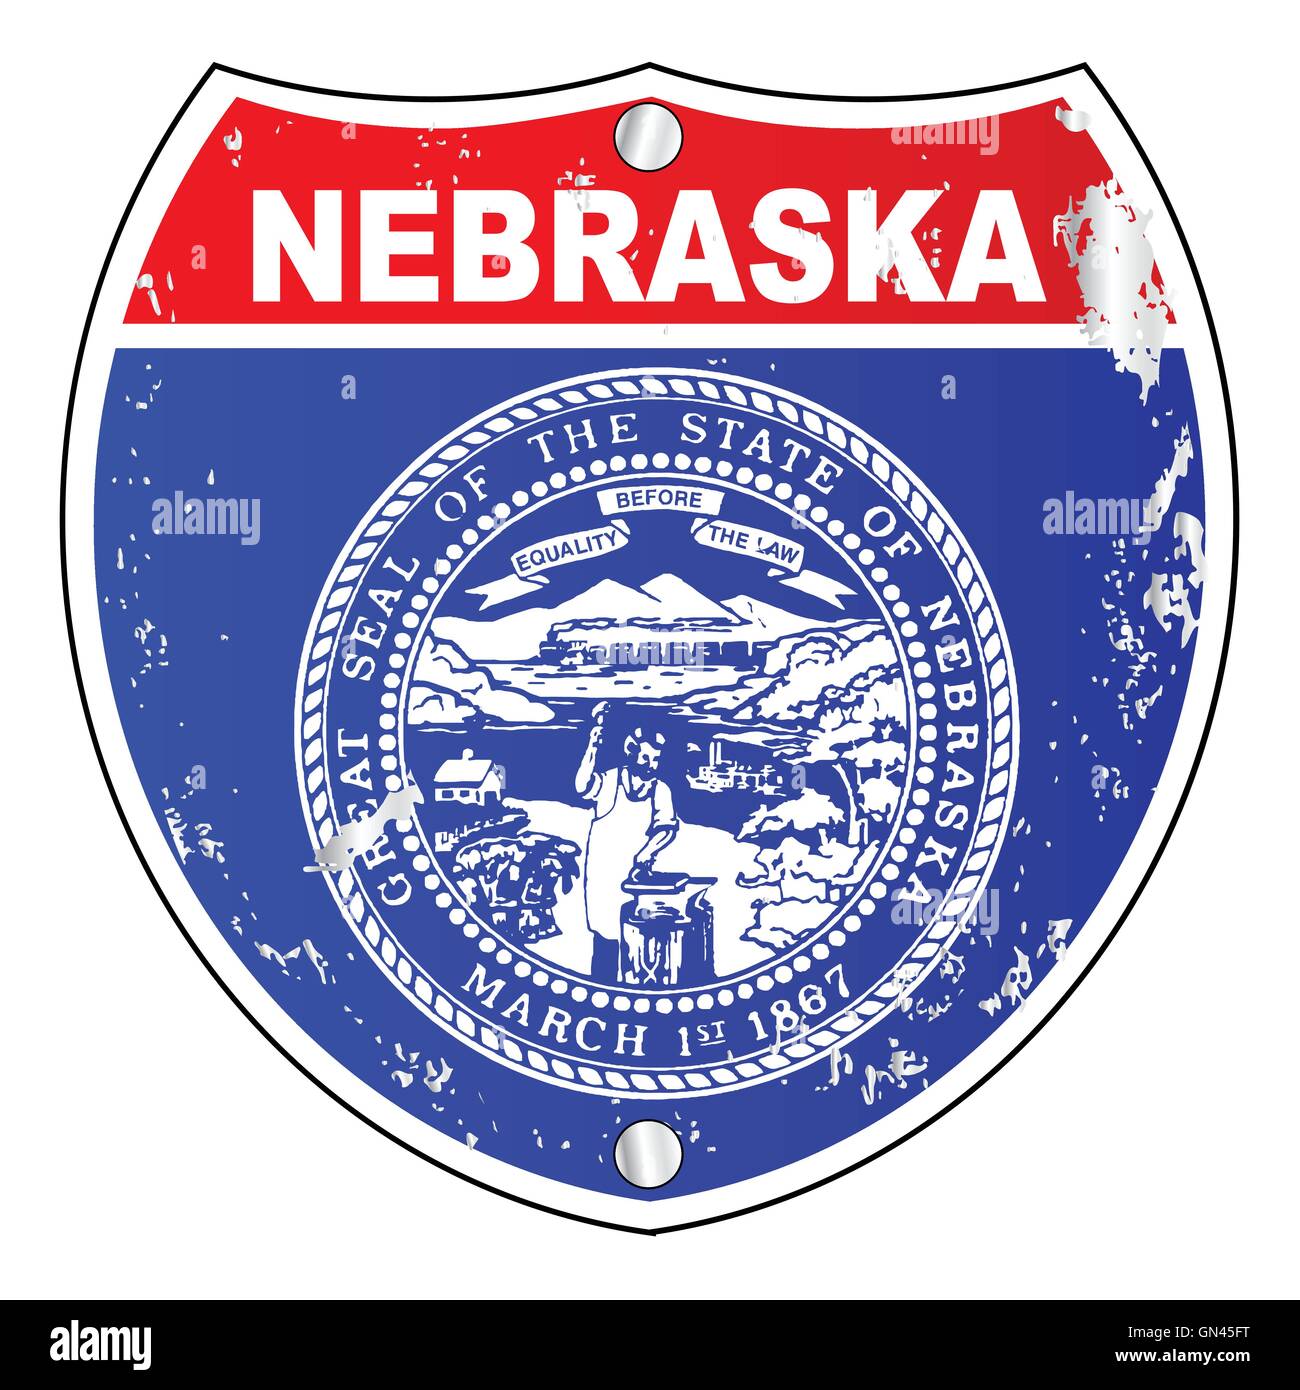 Nebraska Flag Icons As Interstate Sign Stock Vector